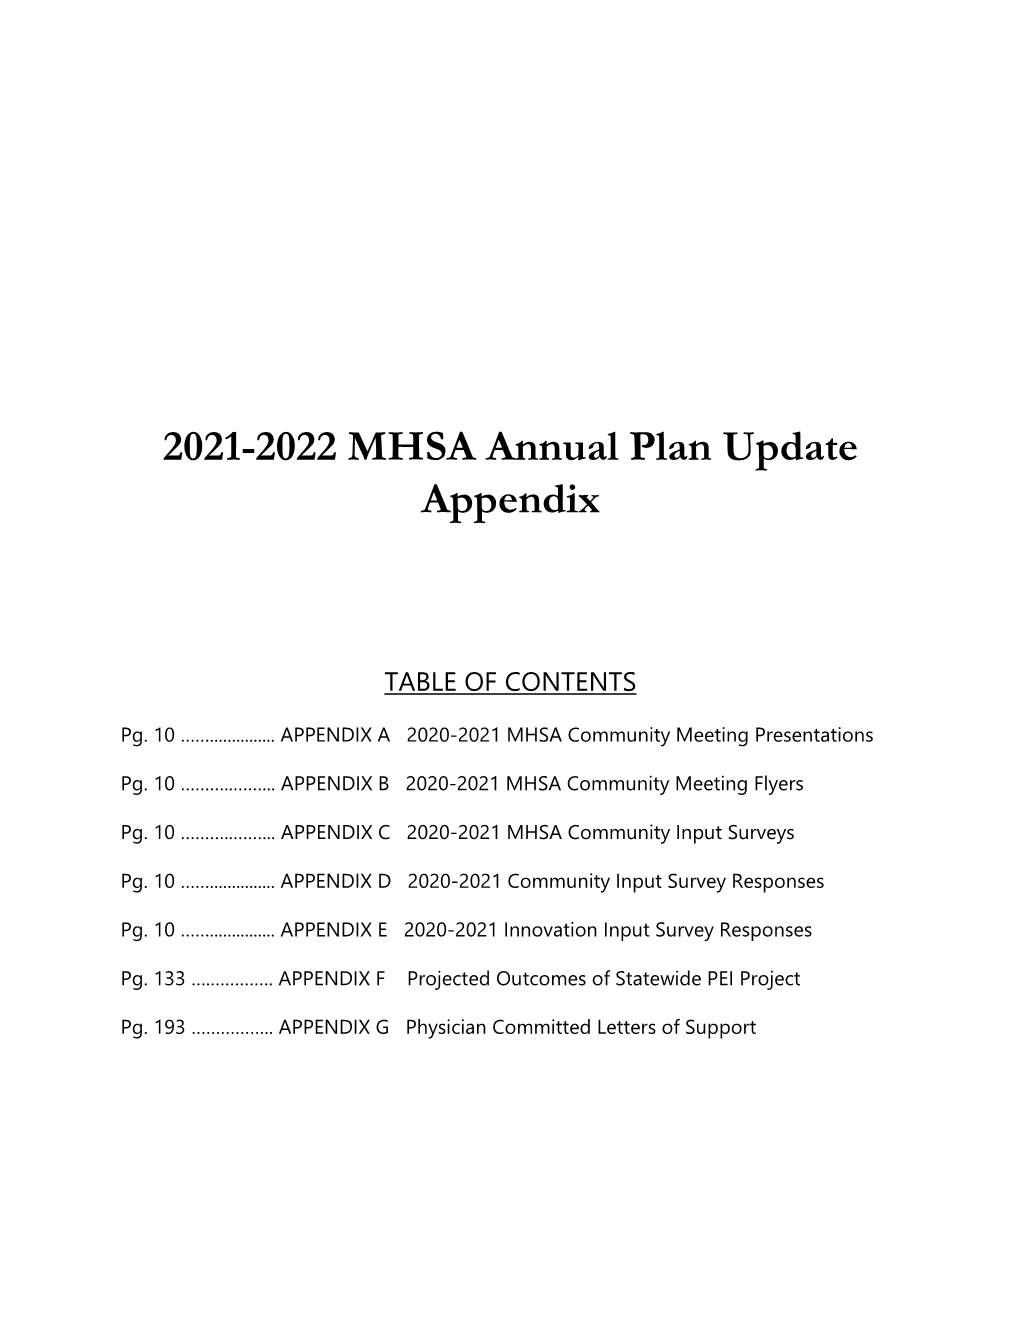 2021-2022 MHSA Annual Plan Update Appendix